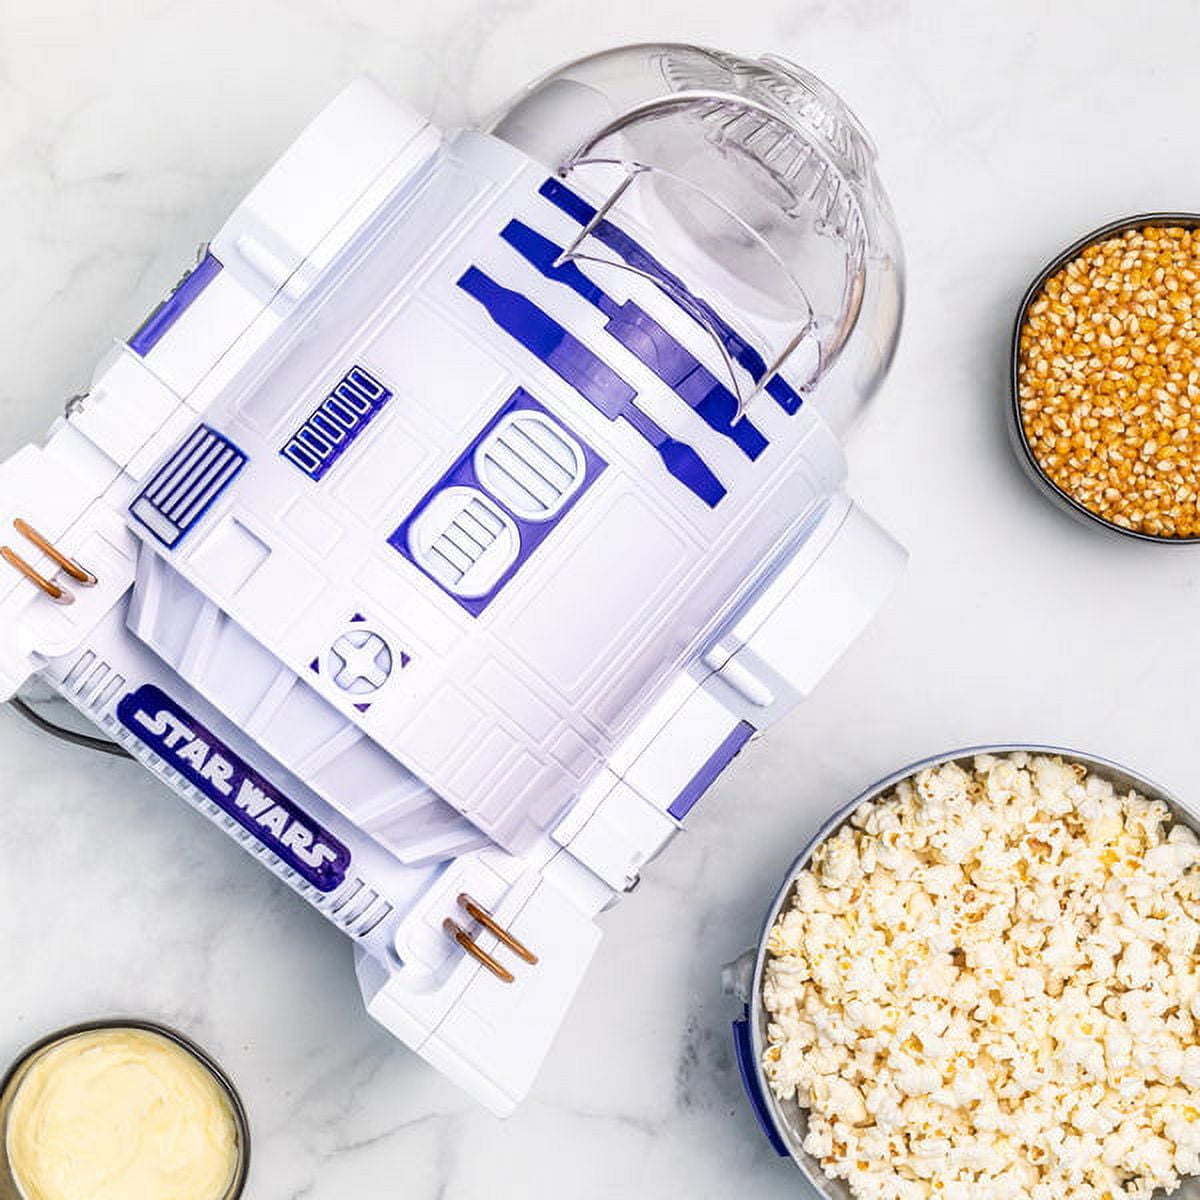 Star Wars R2d2 Popcorn Maker, Popcorn Makers